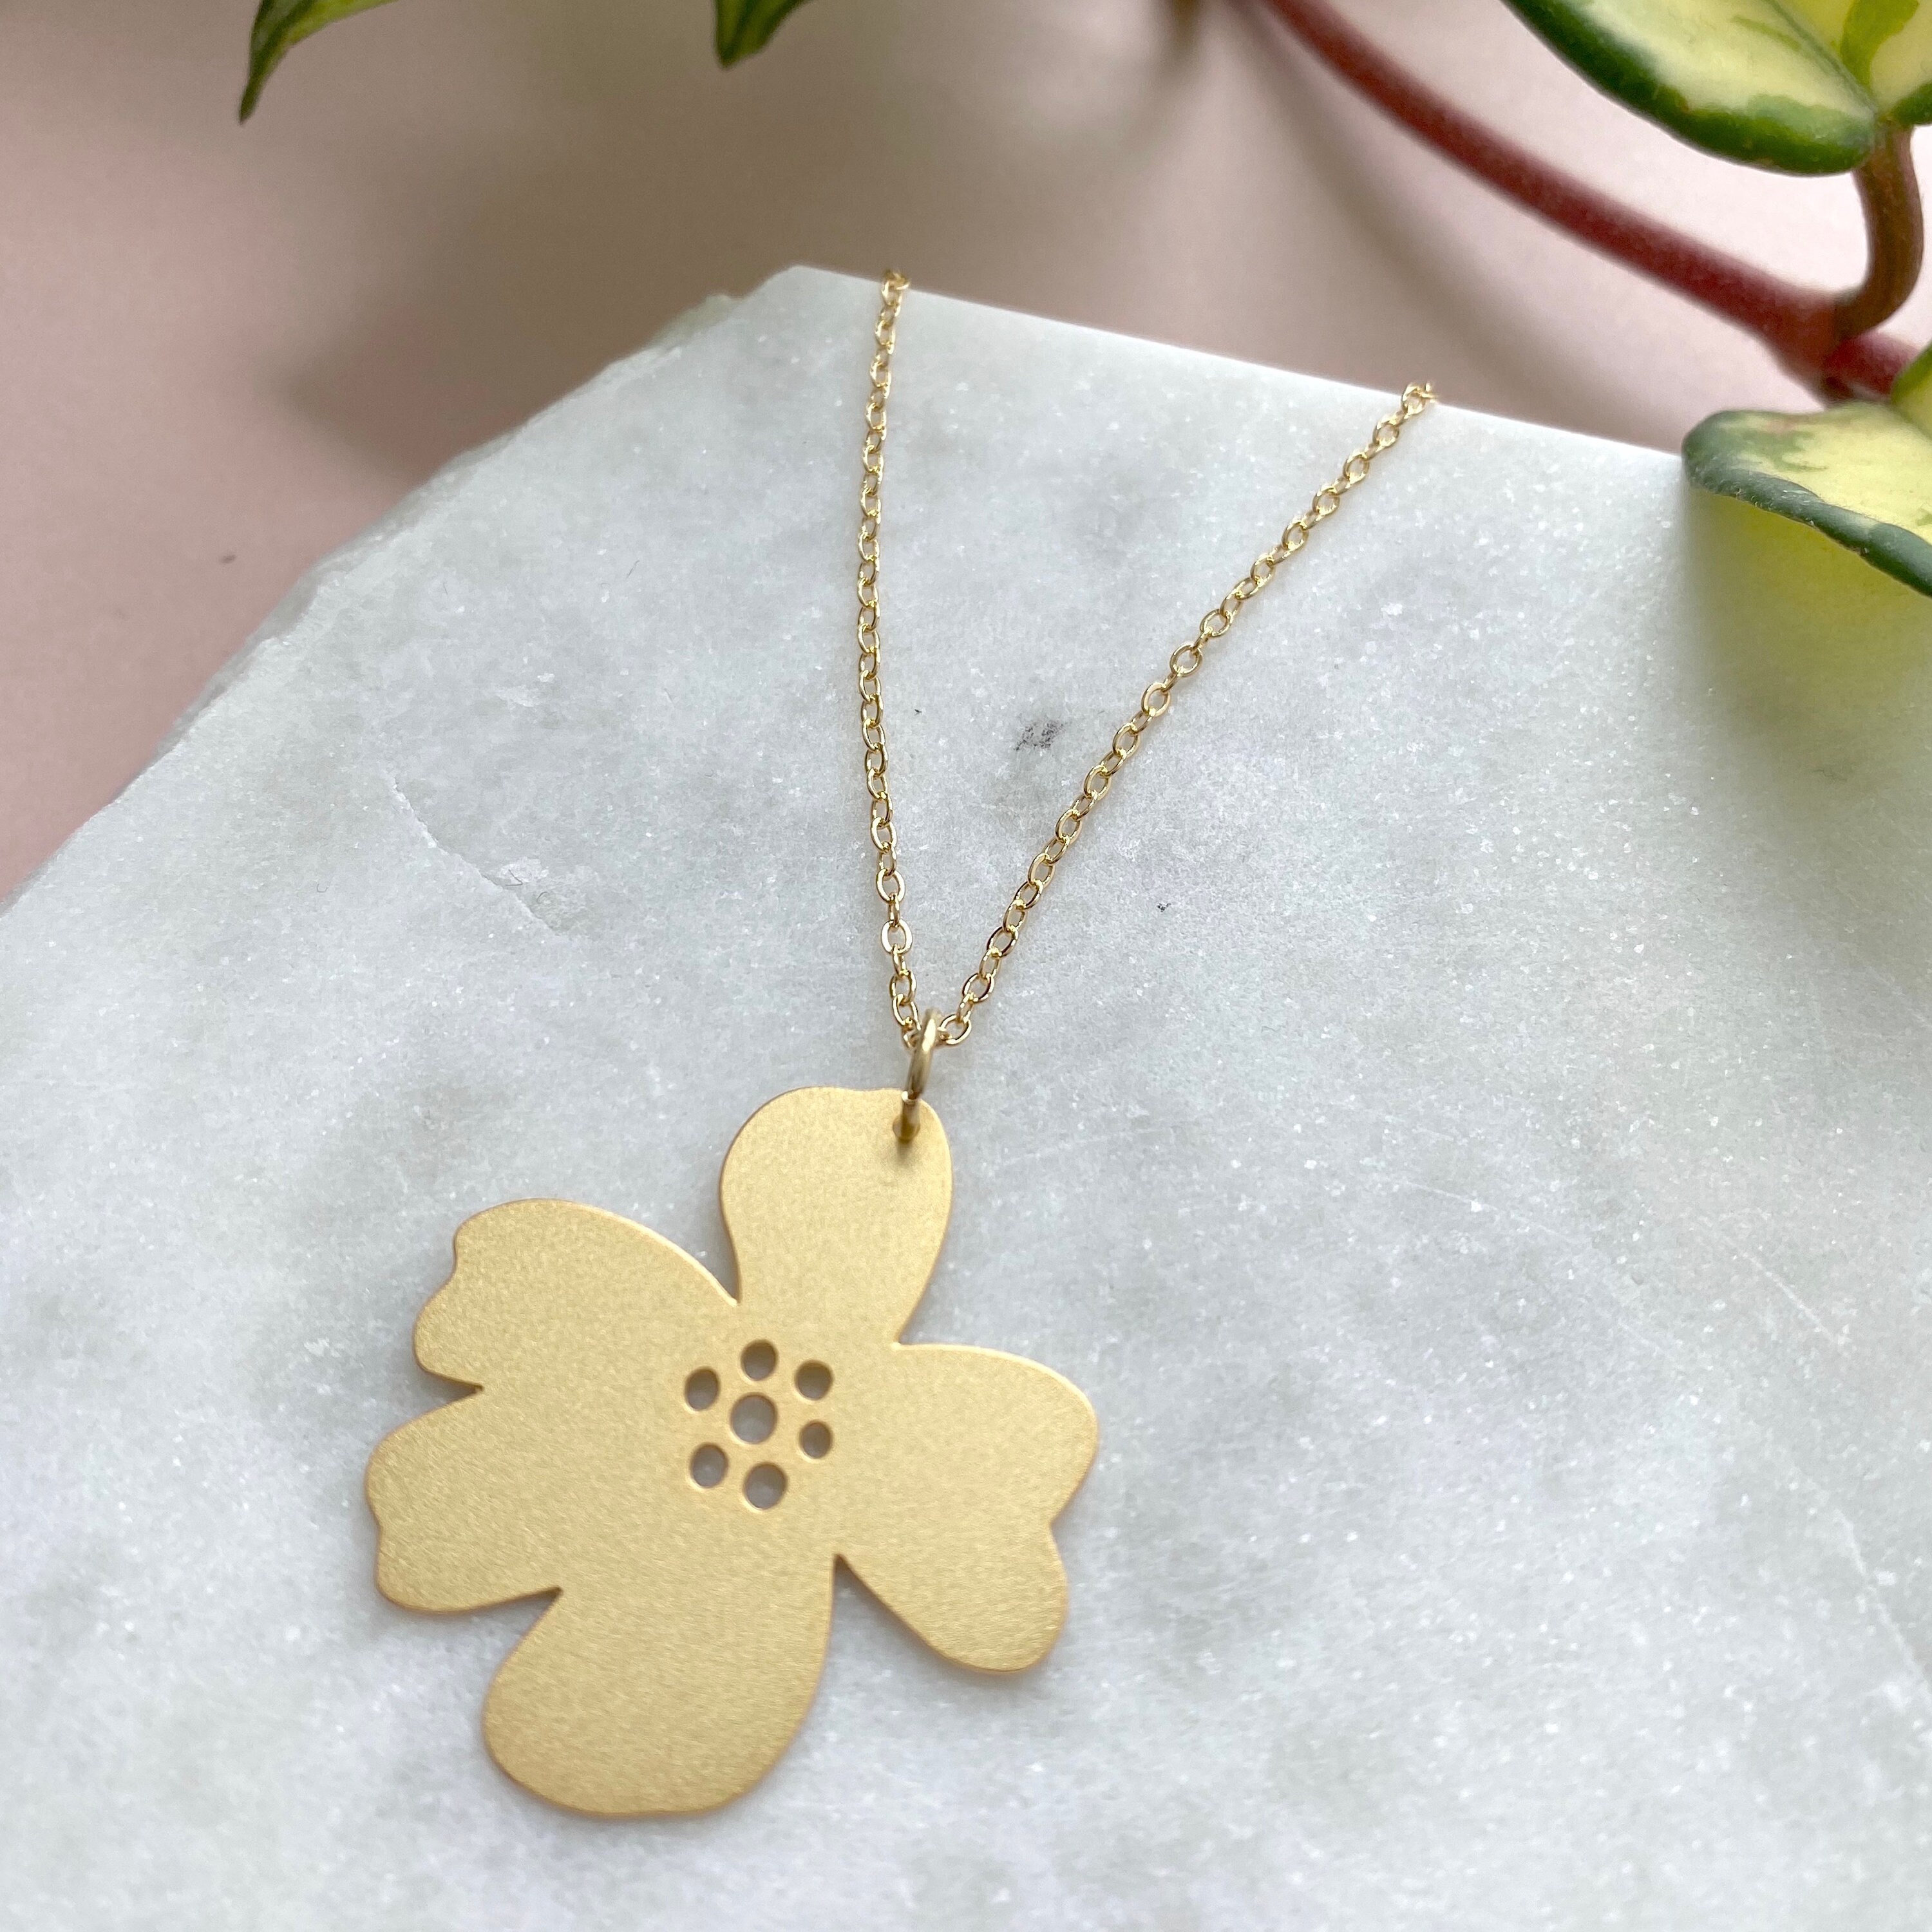 Gold Flower Necklace - Minimal Pendant Botanical Jewellery Floral Simple